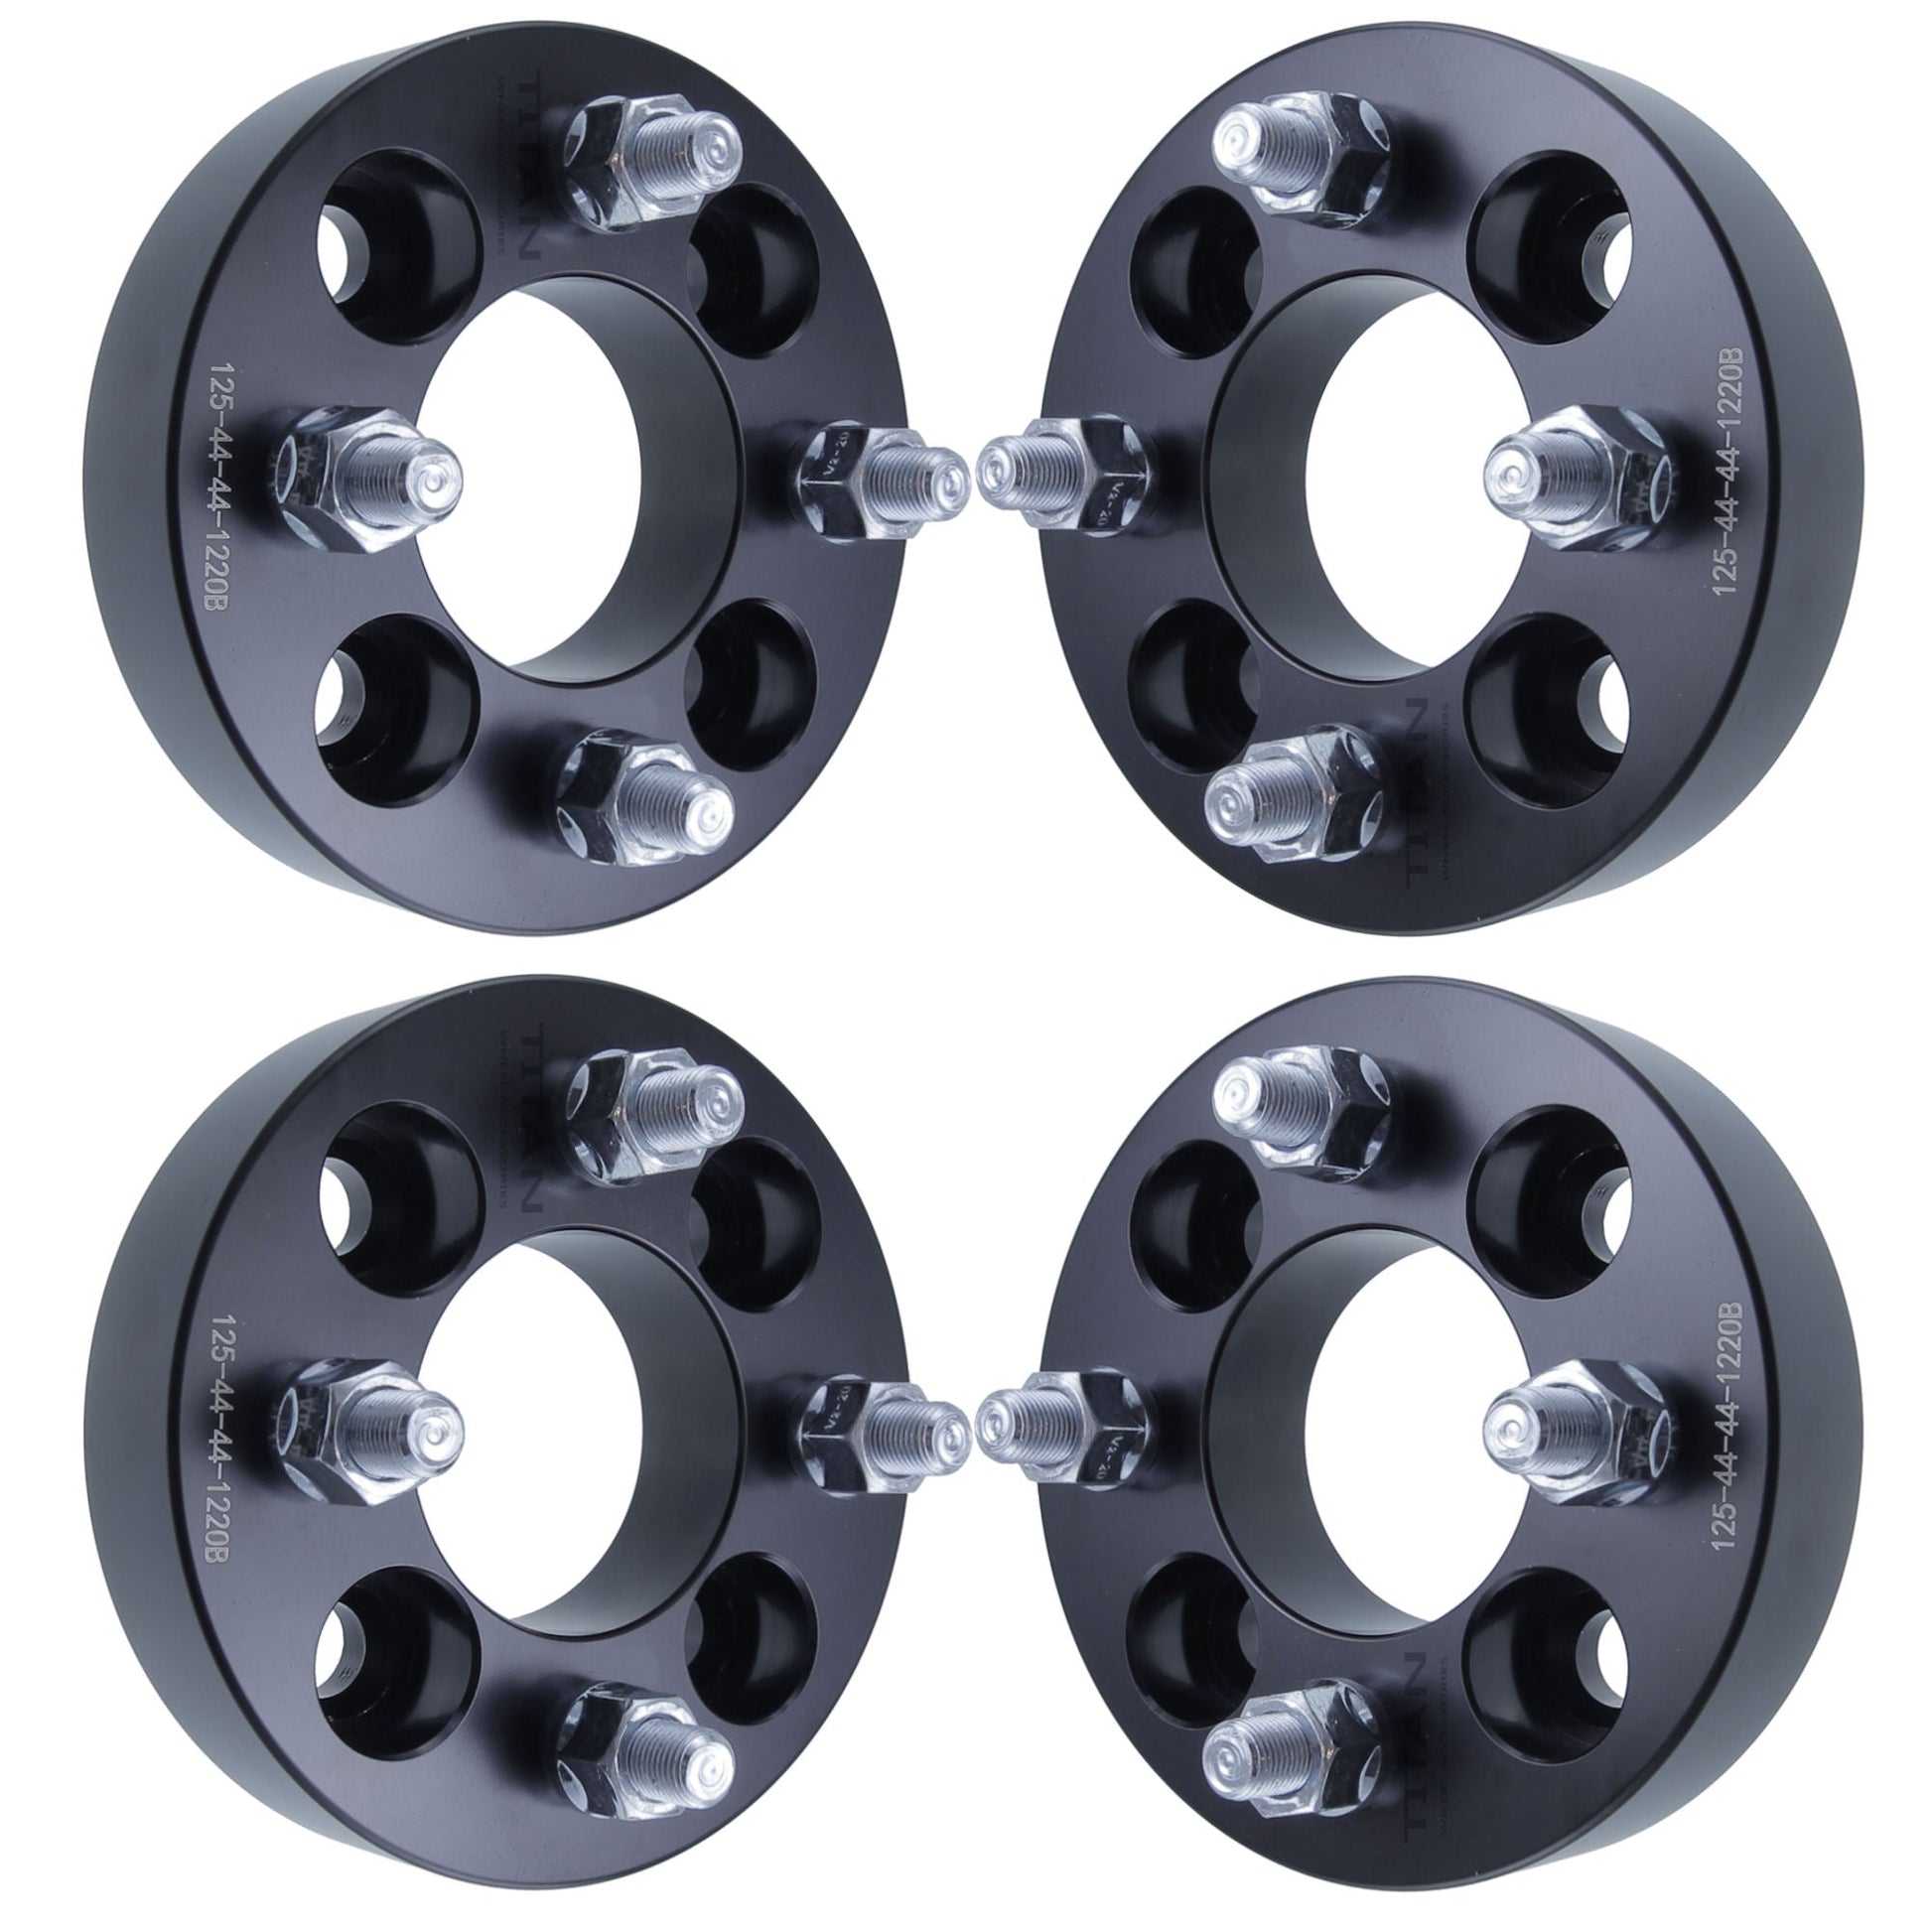 25mm (1") Titan Wheel Spacers for Honda Civic Acura Integra Mazda Protégé Miata Toyota MR2 | 4x100 | 12x1.5 Studs | Set of 4 | Titan Wheel Accessories